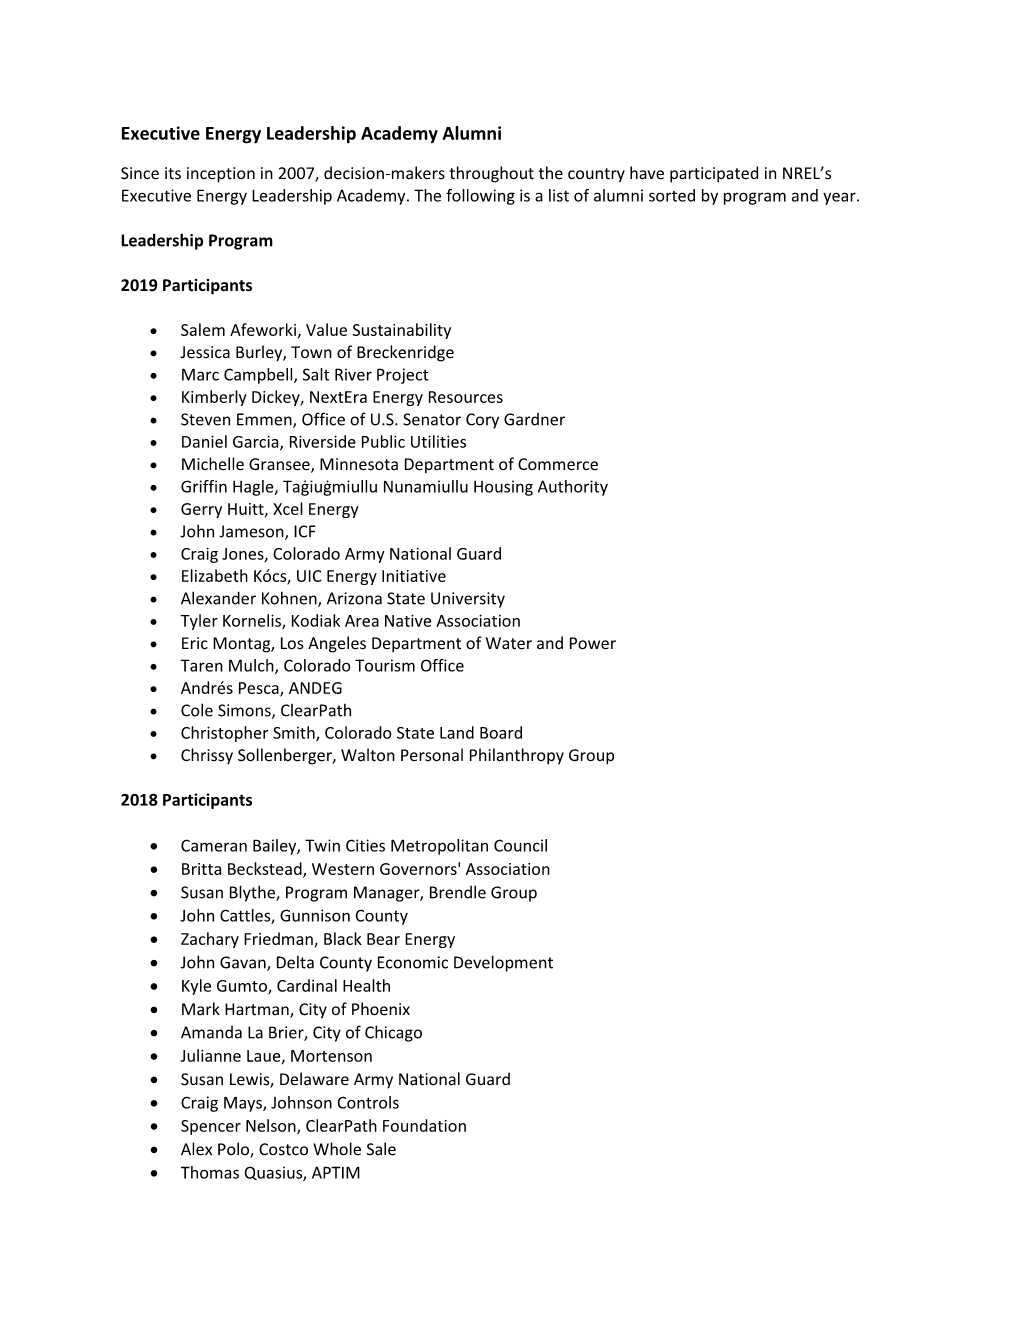 Executive Energy Leadership Academy Alumni List